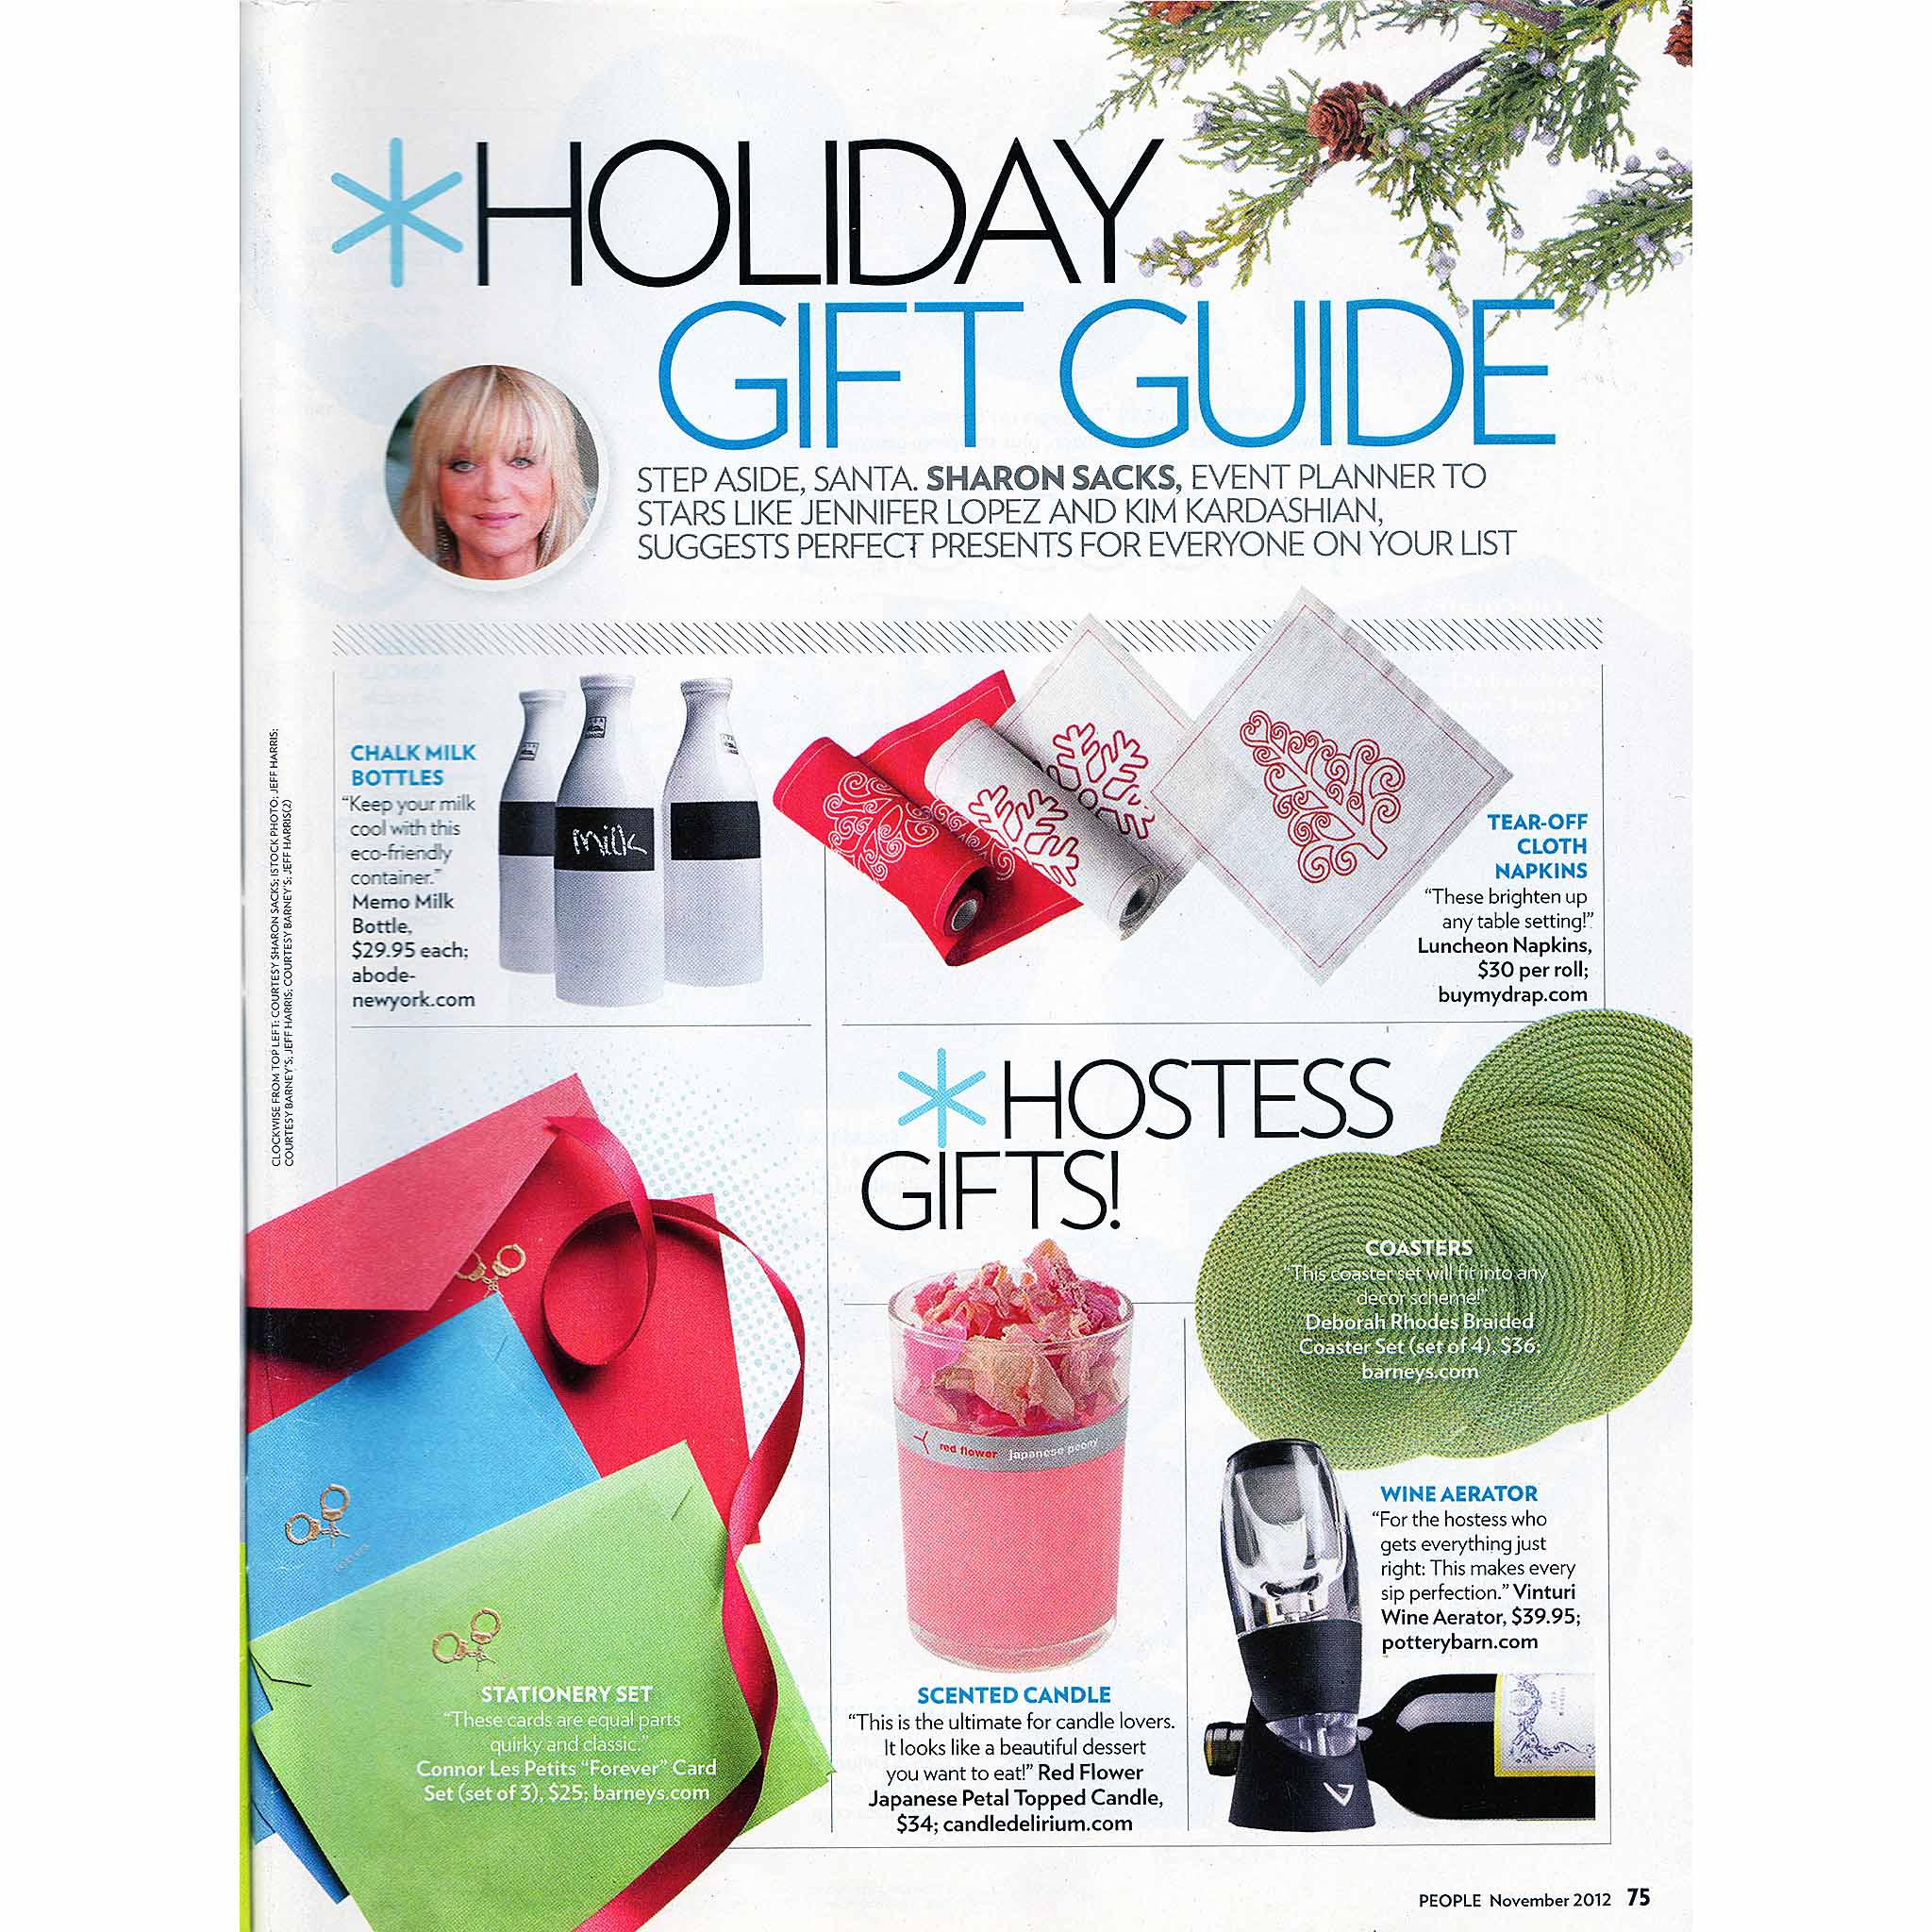 People Magazine Extra, "Sharon Sacks' Holiday Gift Guide," ASA-Selection's Memo Milk Bottle, November 2012, page 75.